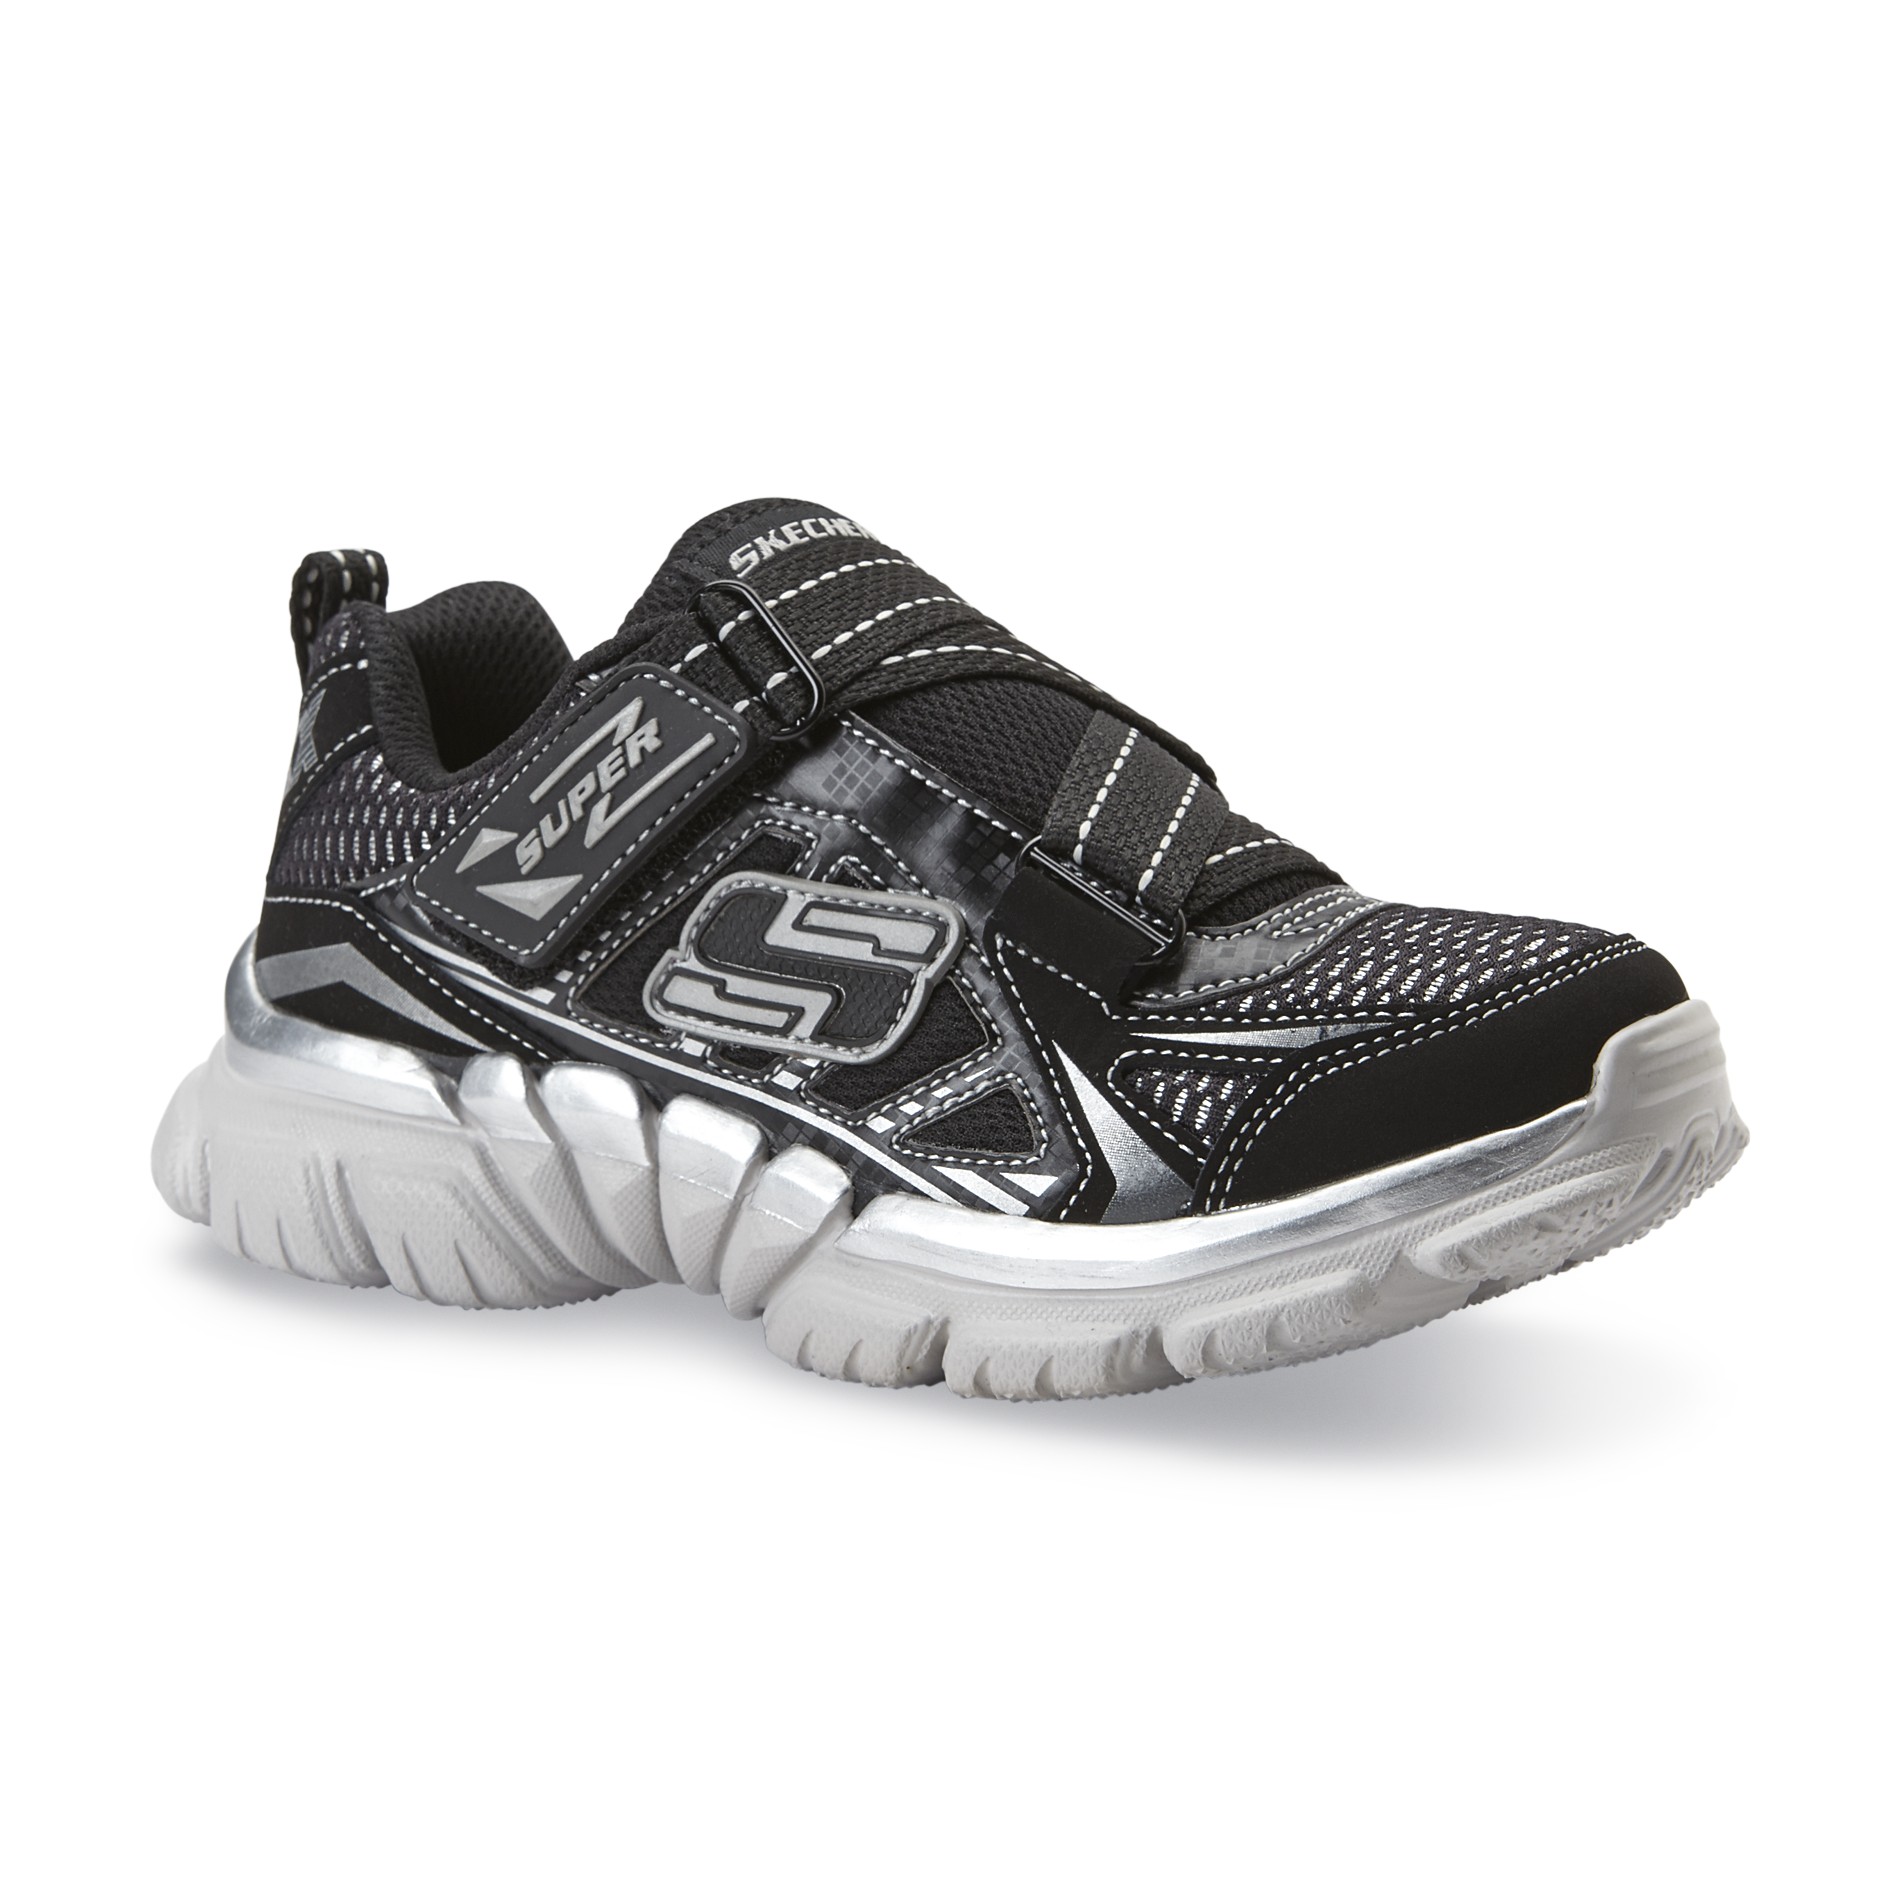 Skechers Boy's Tough Trax Quads Black/Silver Athletic Shoe